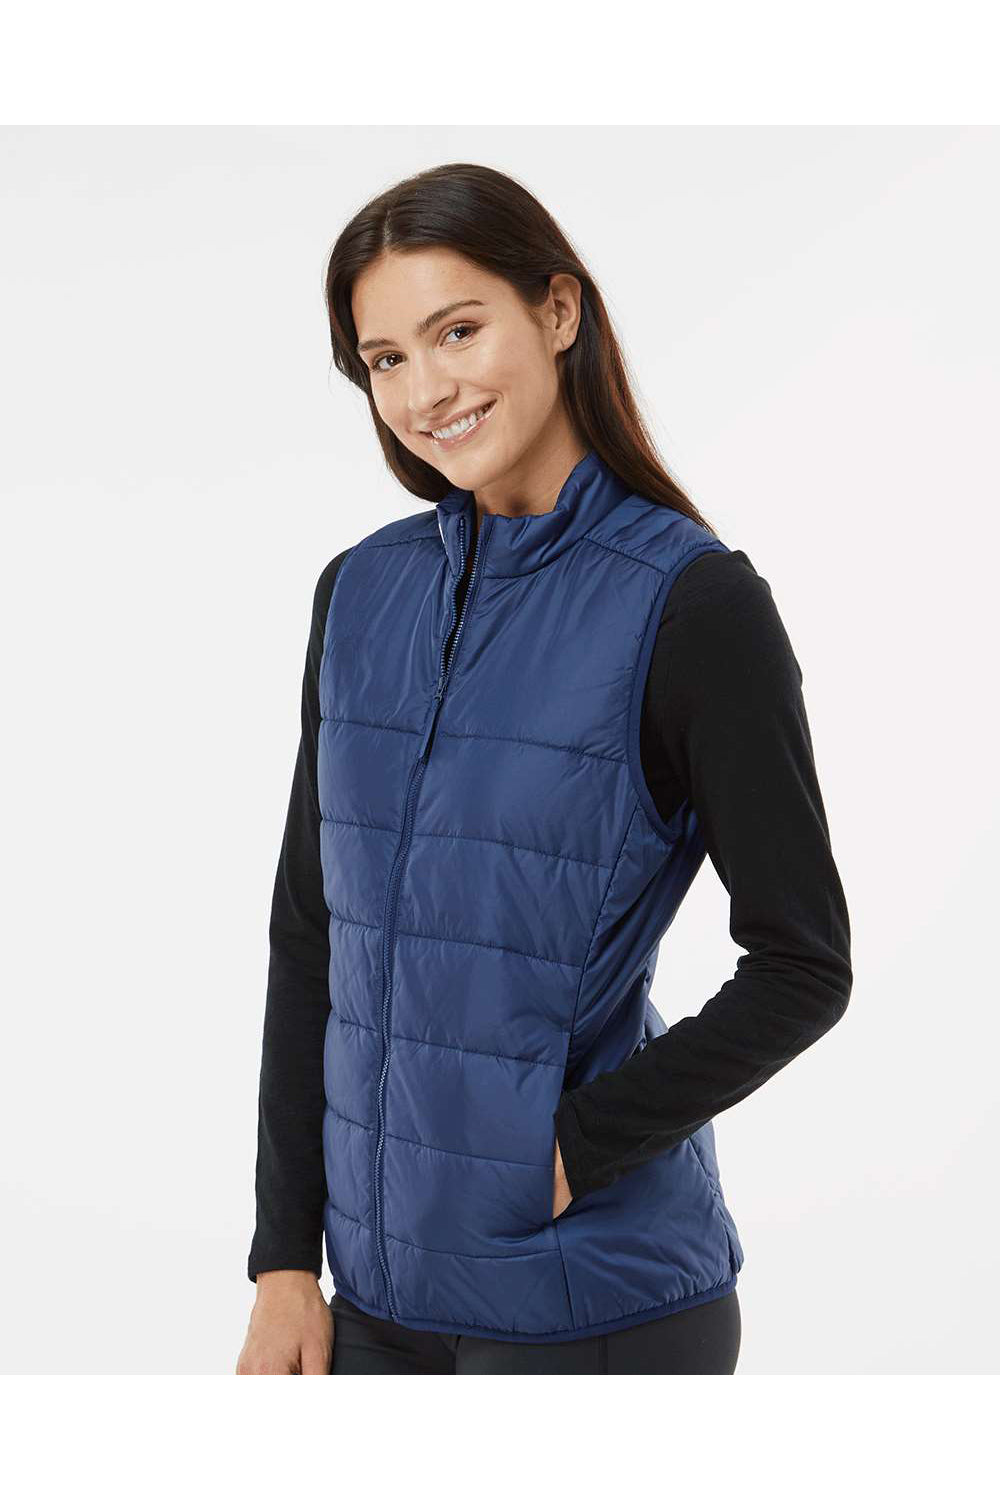 Adidas A573 Womens Full Zip Puffer Vest Team Navy Blue Model Side